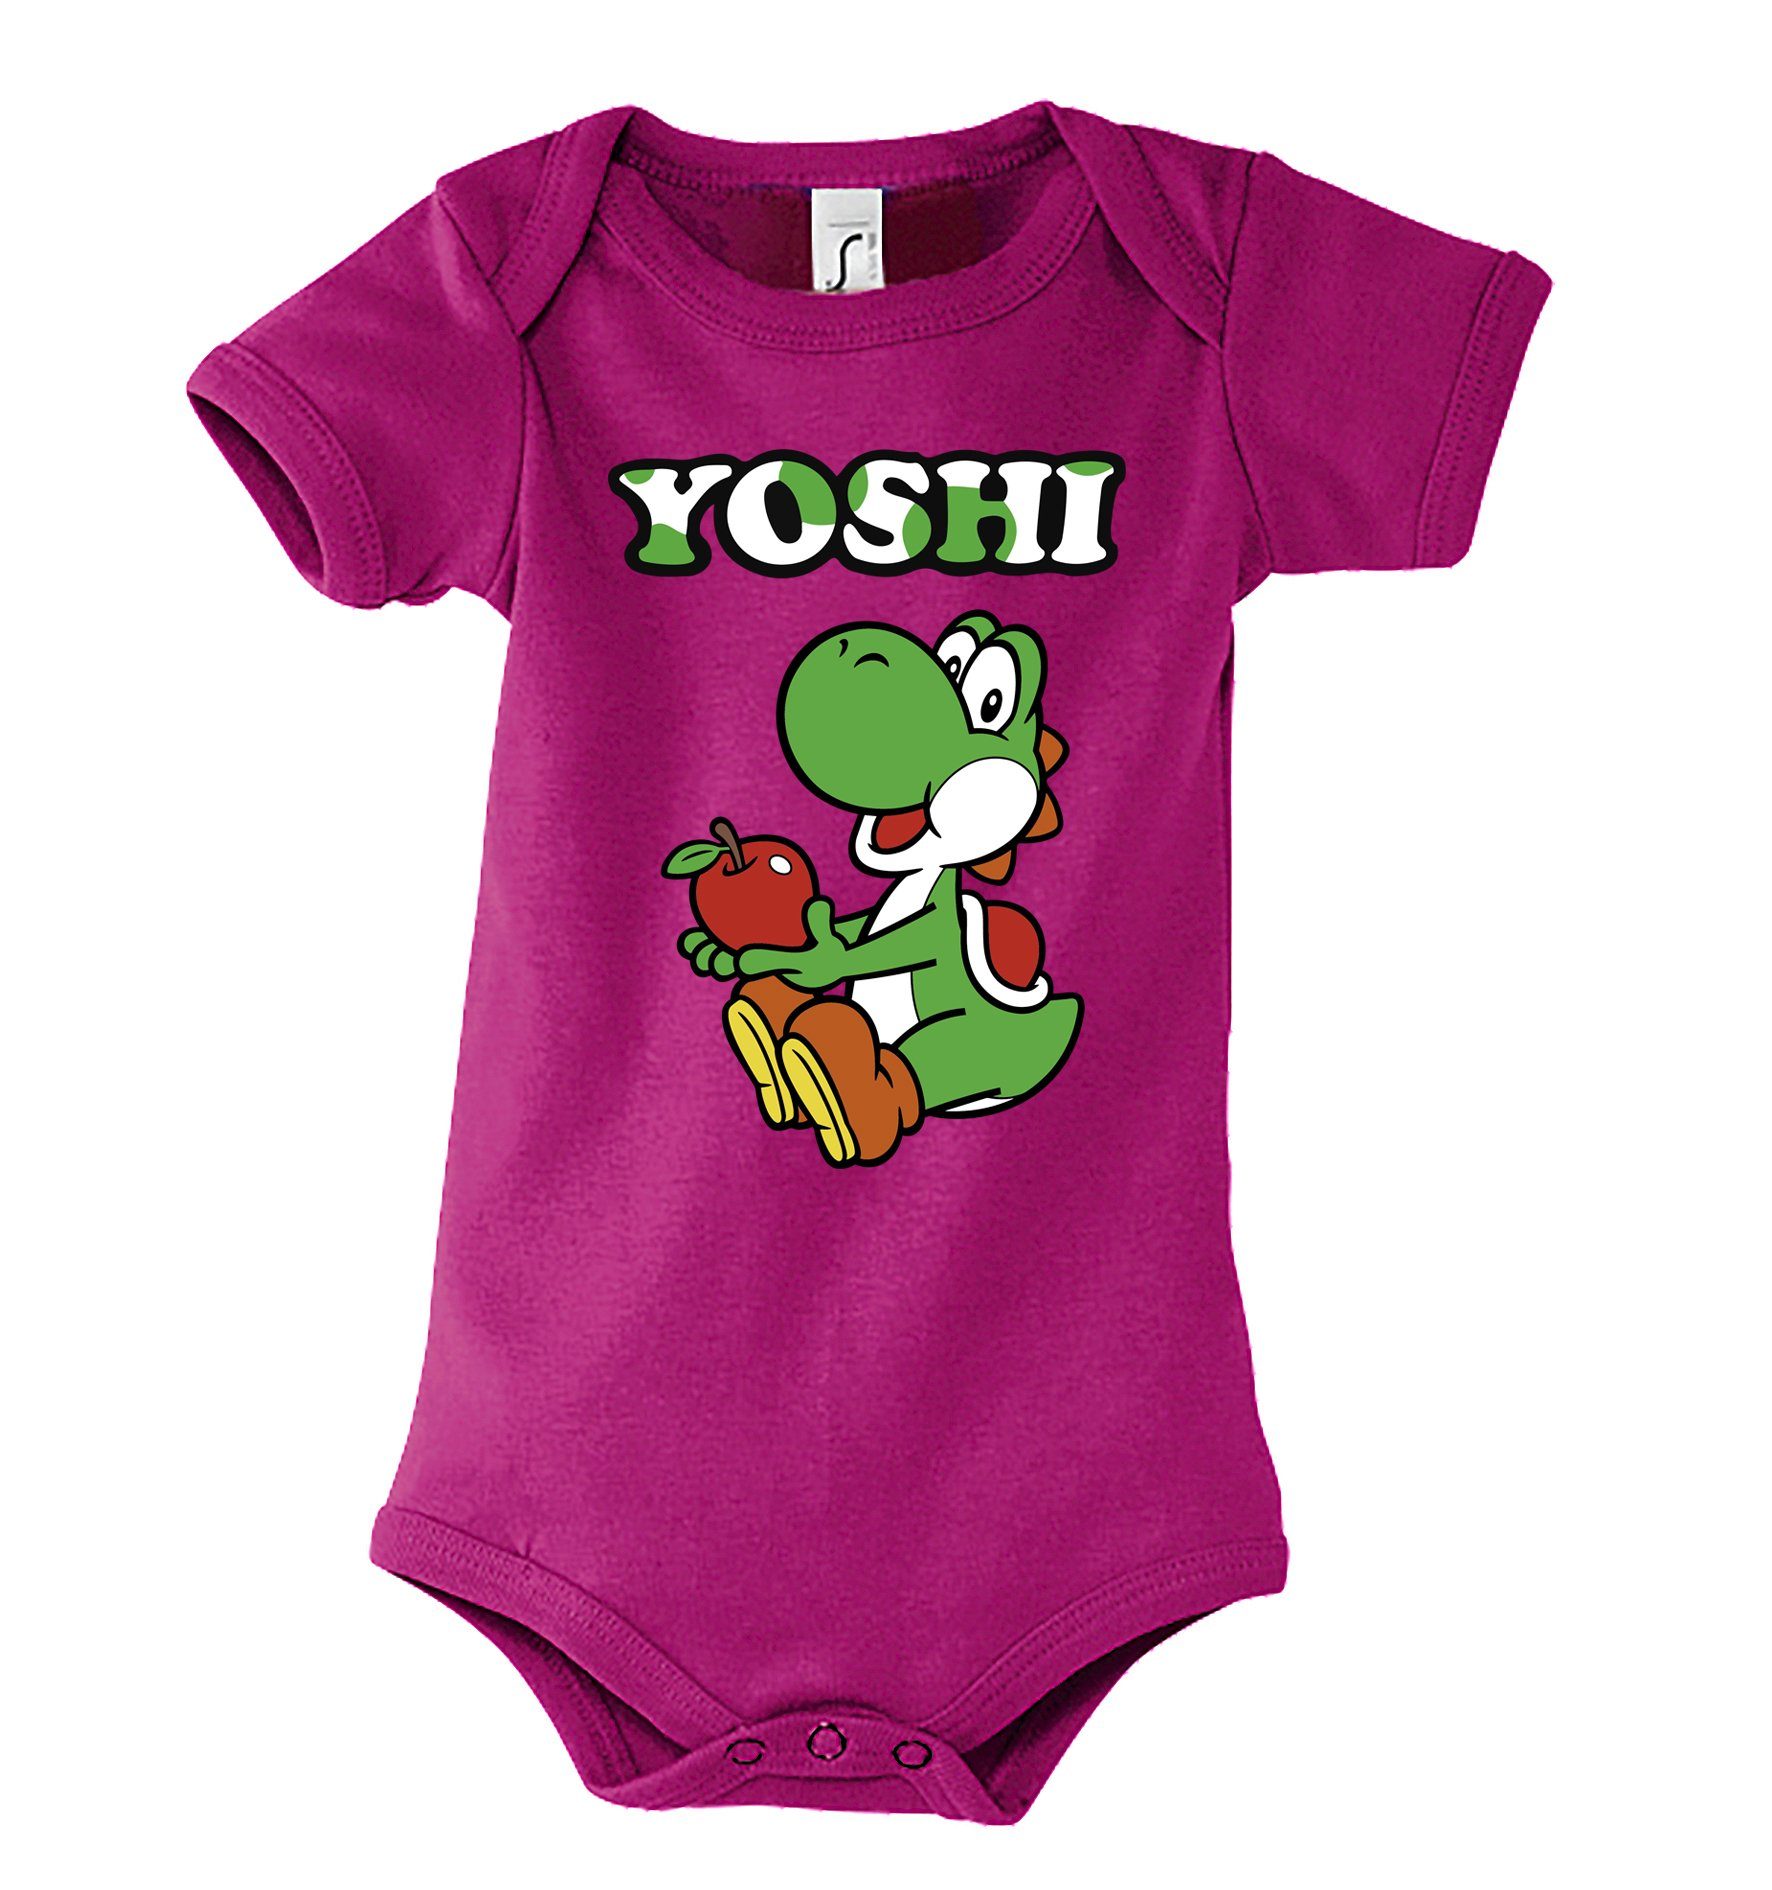 Youth Designz Kurzarmbody Baby Body Strampler Yoshi mit niedlichem Frontprint Fuchsia